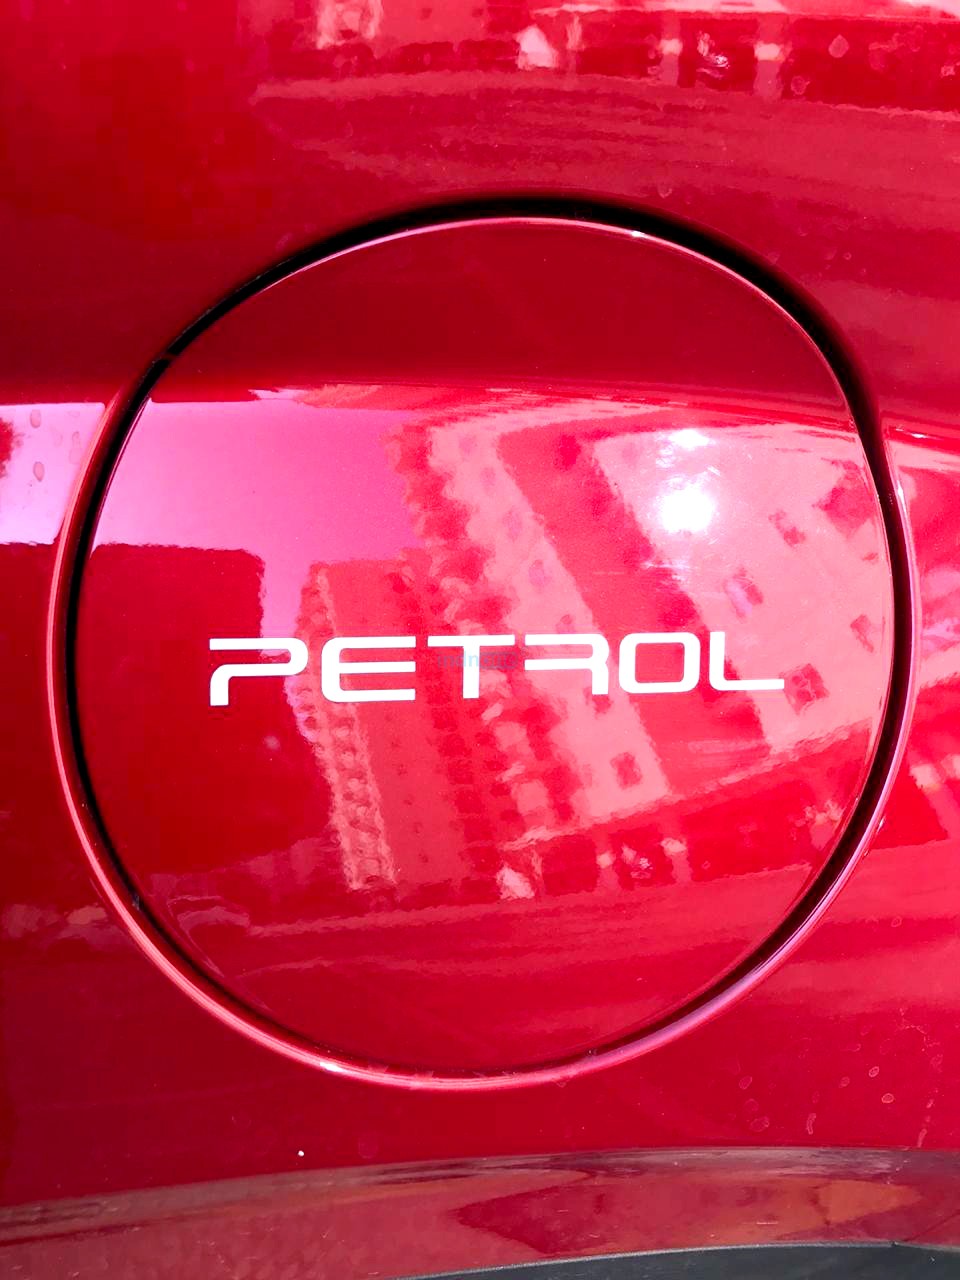 indnone® Petrol Logo Sticker for Car Waterproof PVC Vinyl Decal Sticker | White Color Standard Size